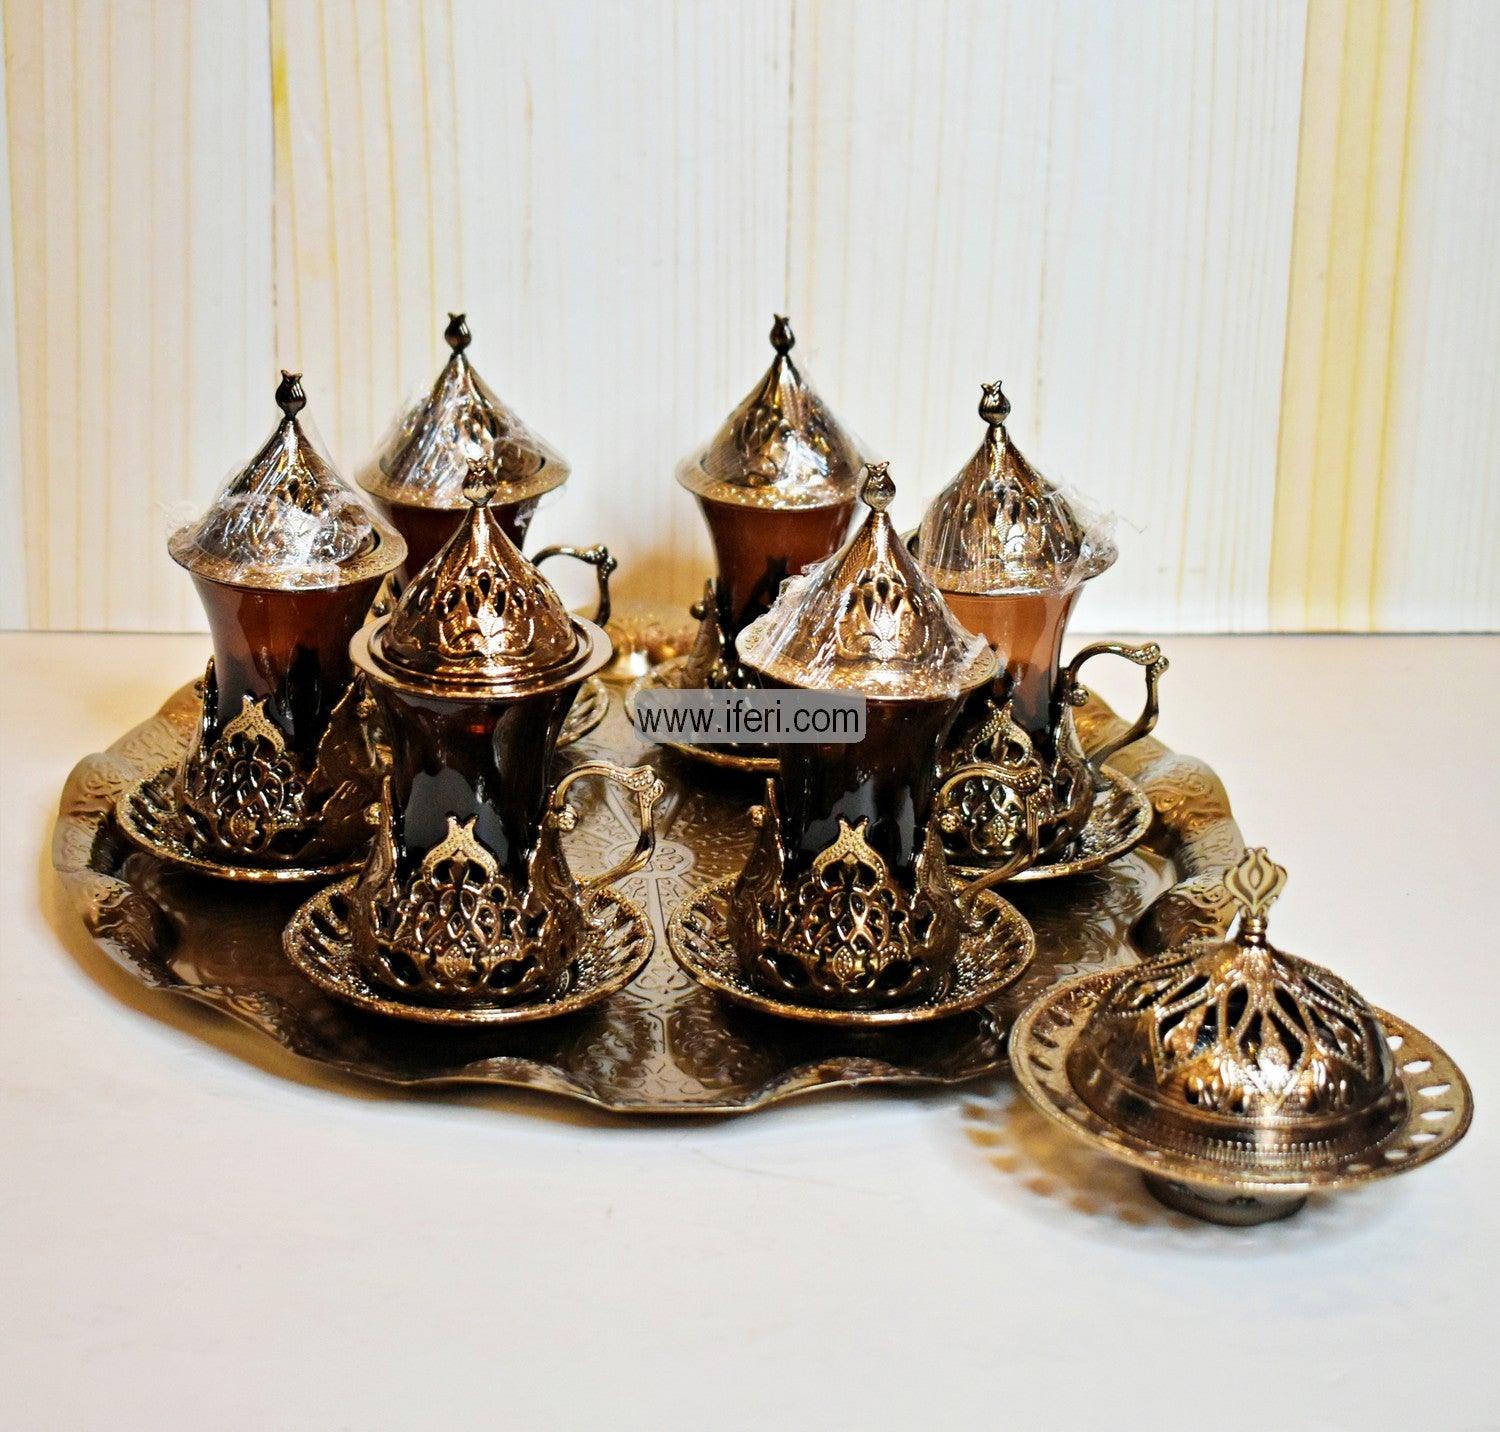 13 Pcs Exclusive Glass & Metal Turkish Tea Set with Tray GA0625 Price in Bangladesh - iferi.com